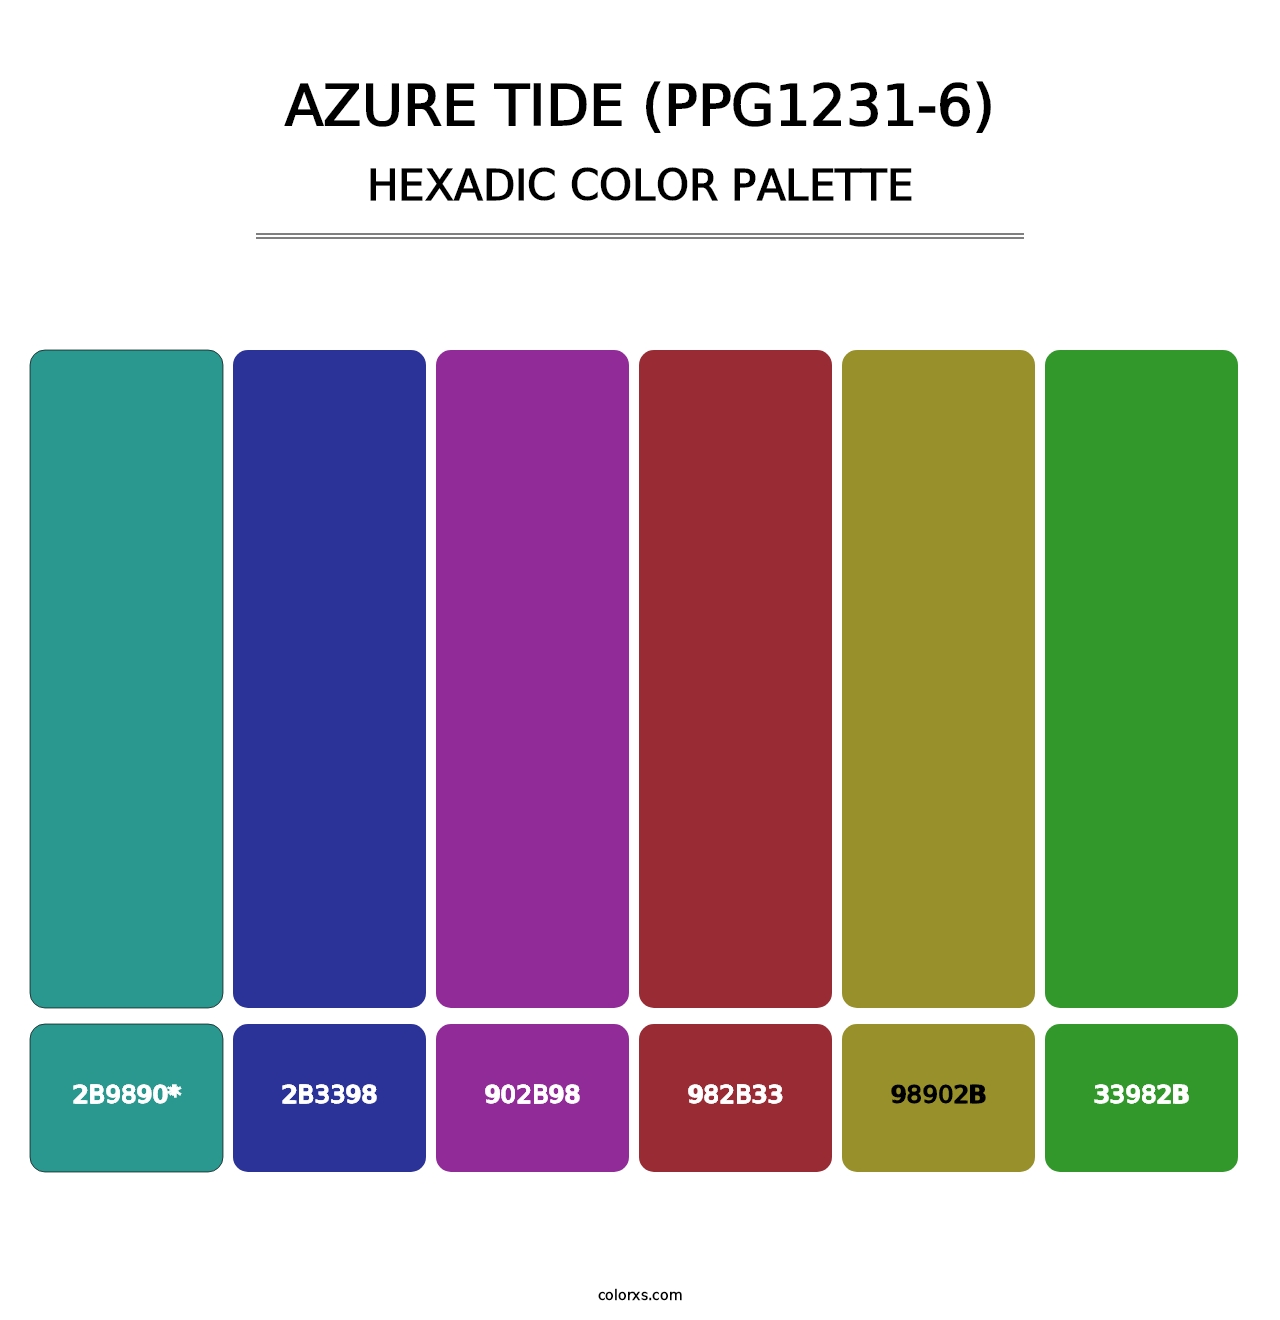 Azure Tide (PPG1231-6) - Hexadic Color Palette